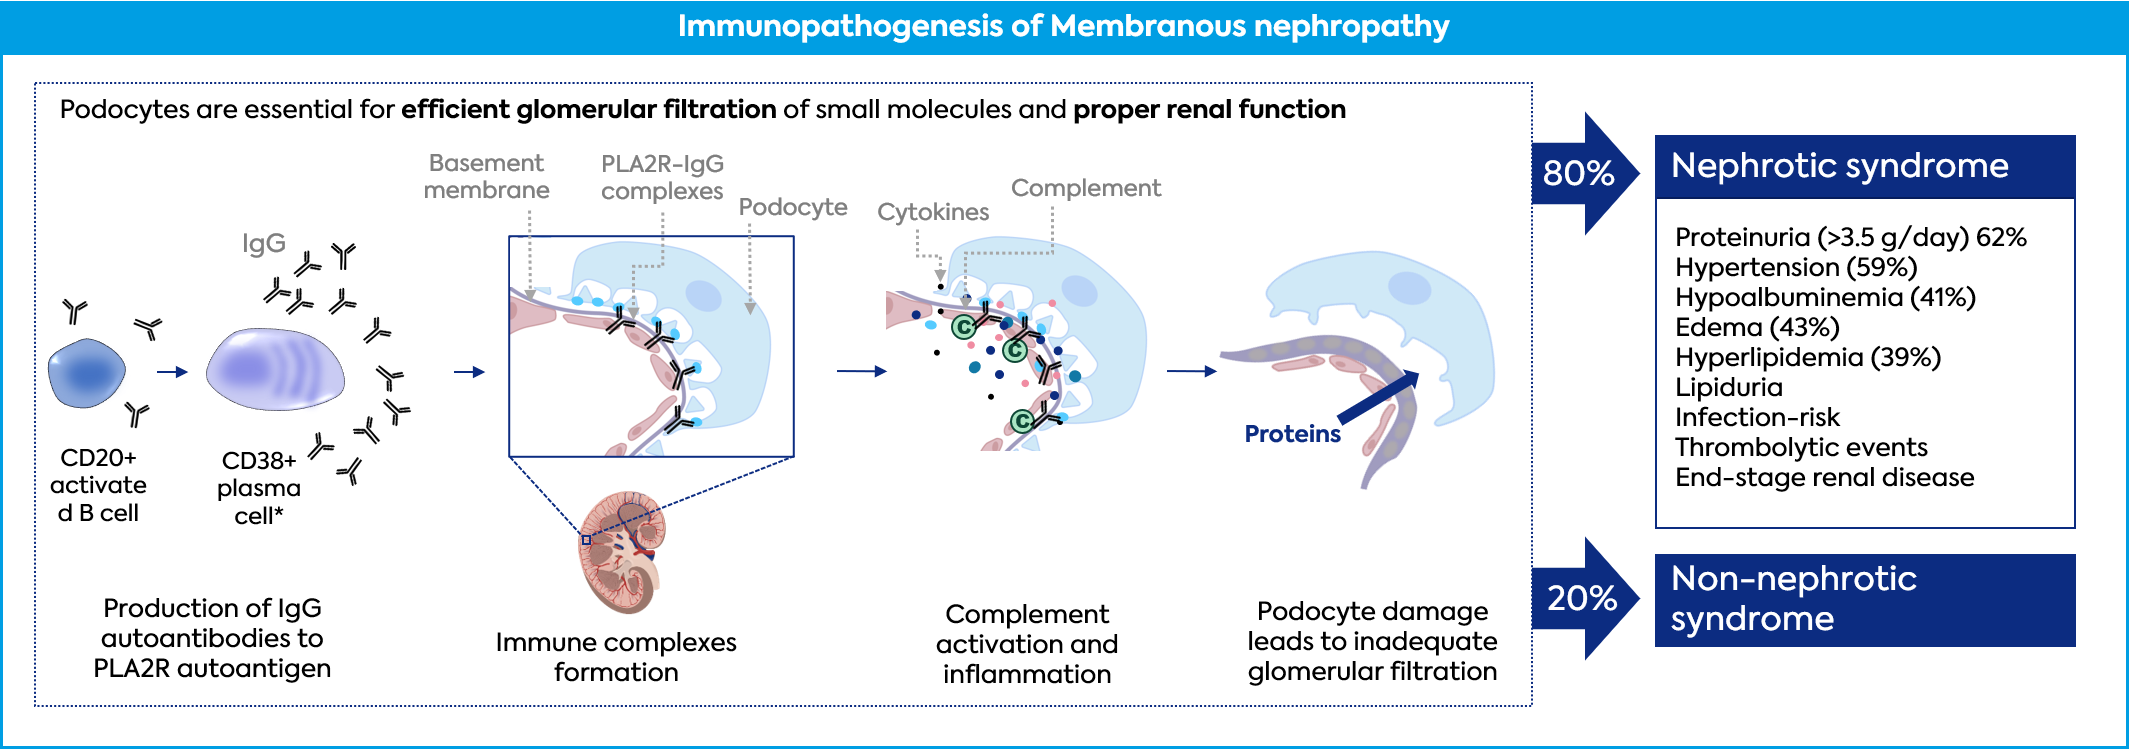 PATHOGENESIS IN ANTI-PLA2R ANTIBODY-POSITIVE MEMBRANOUS NEPHROPATHY